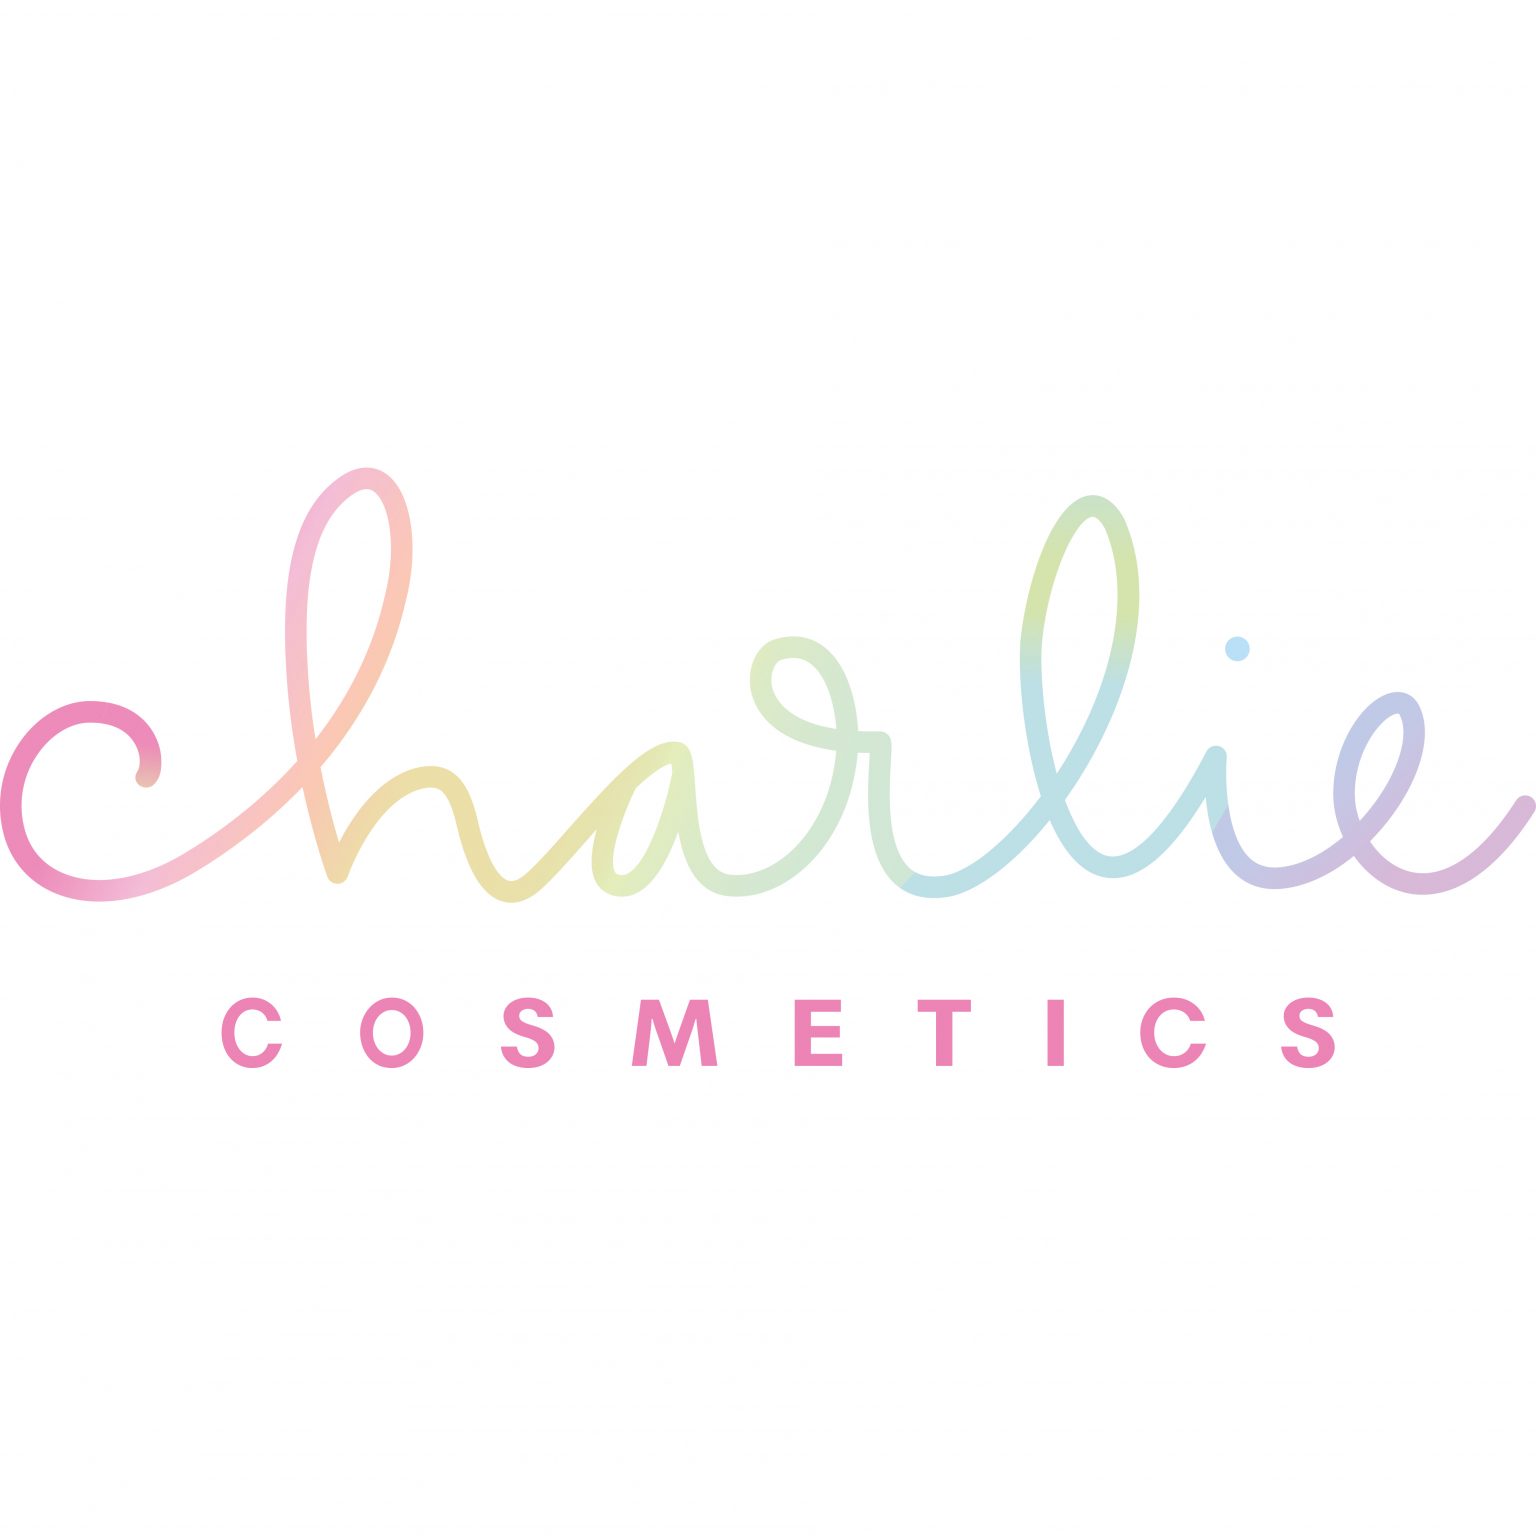 Charlie Cosmetics